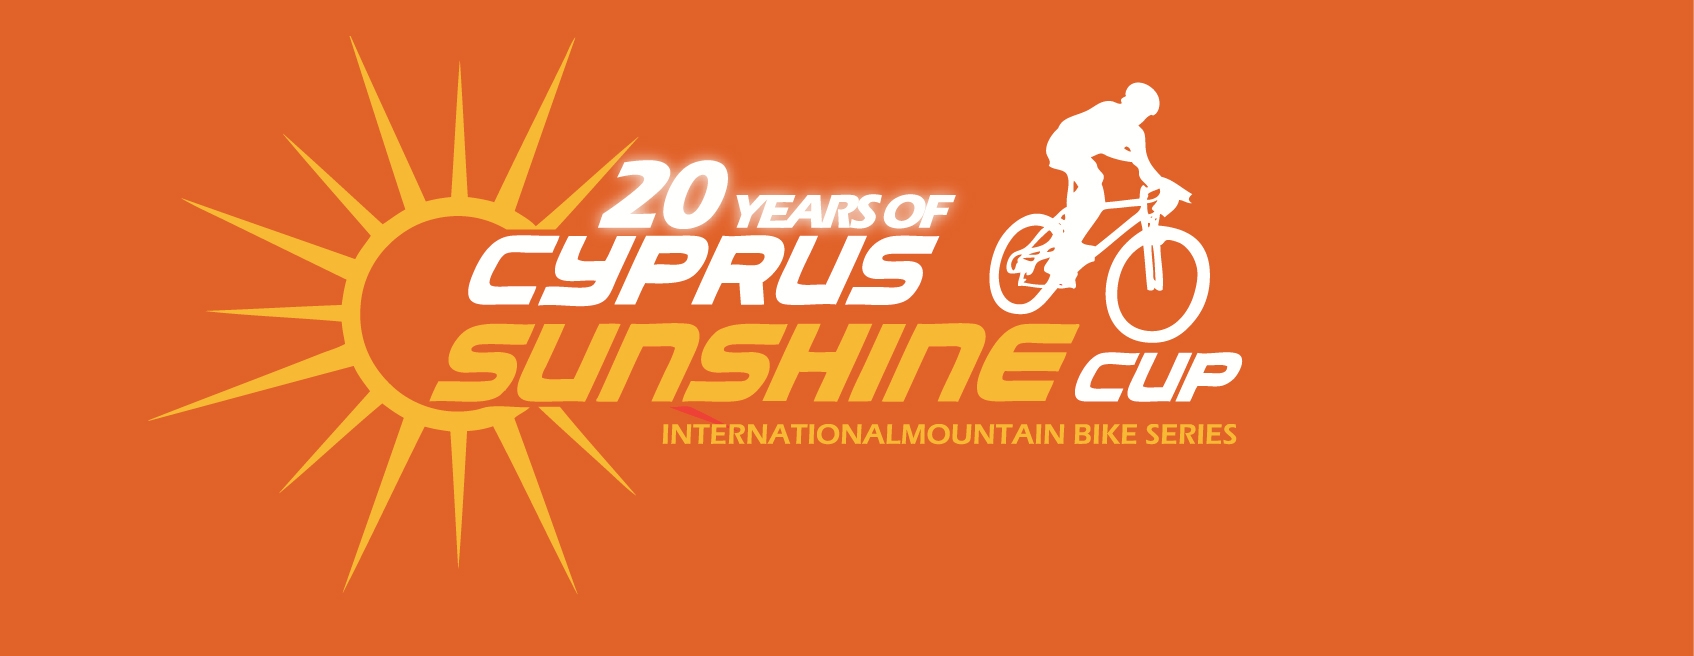 SunshineCup Logo 2017